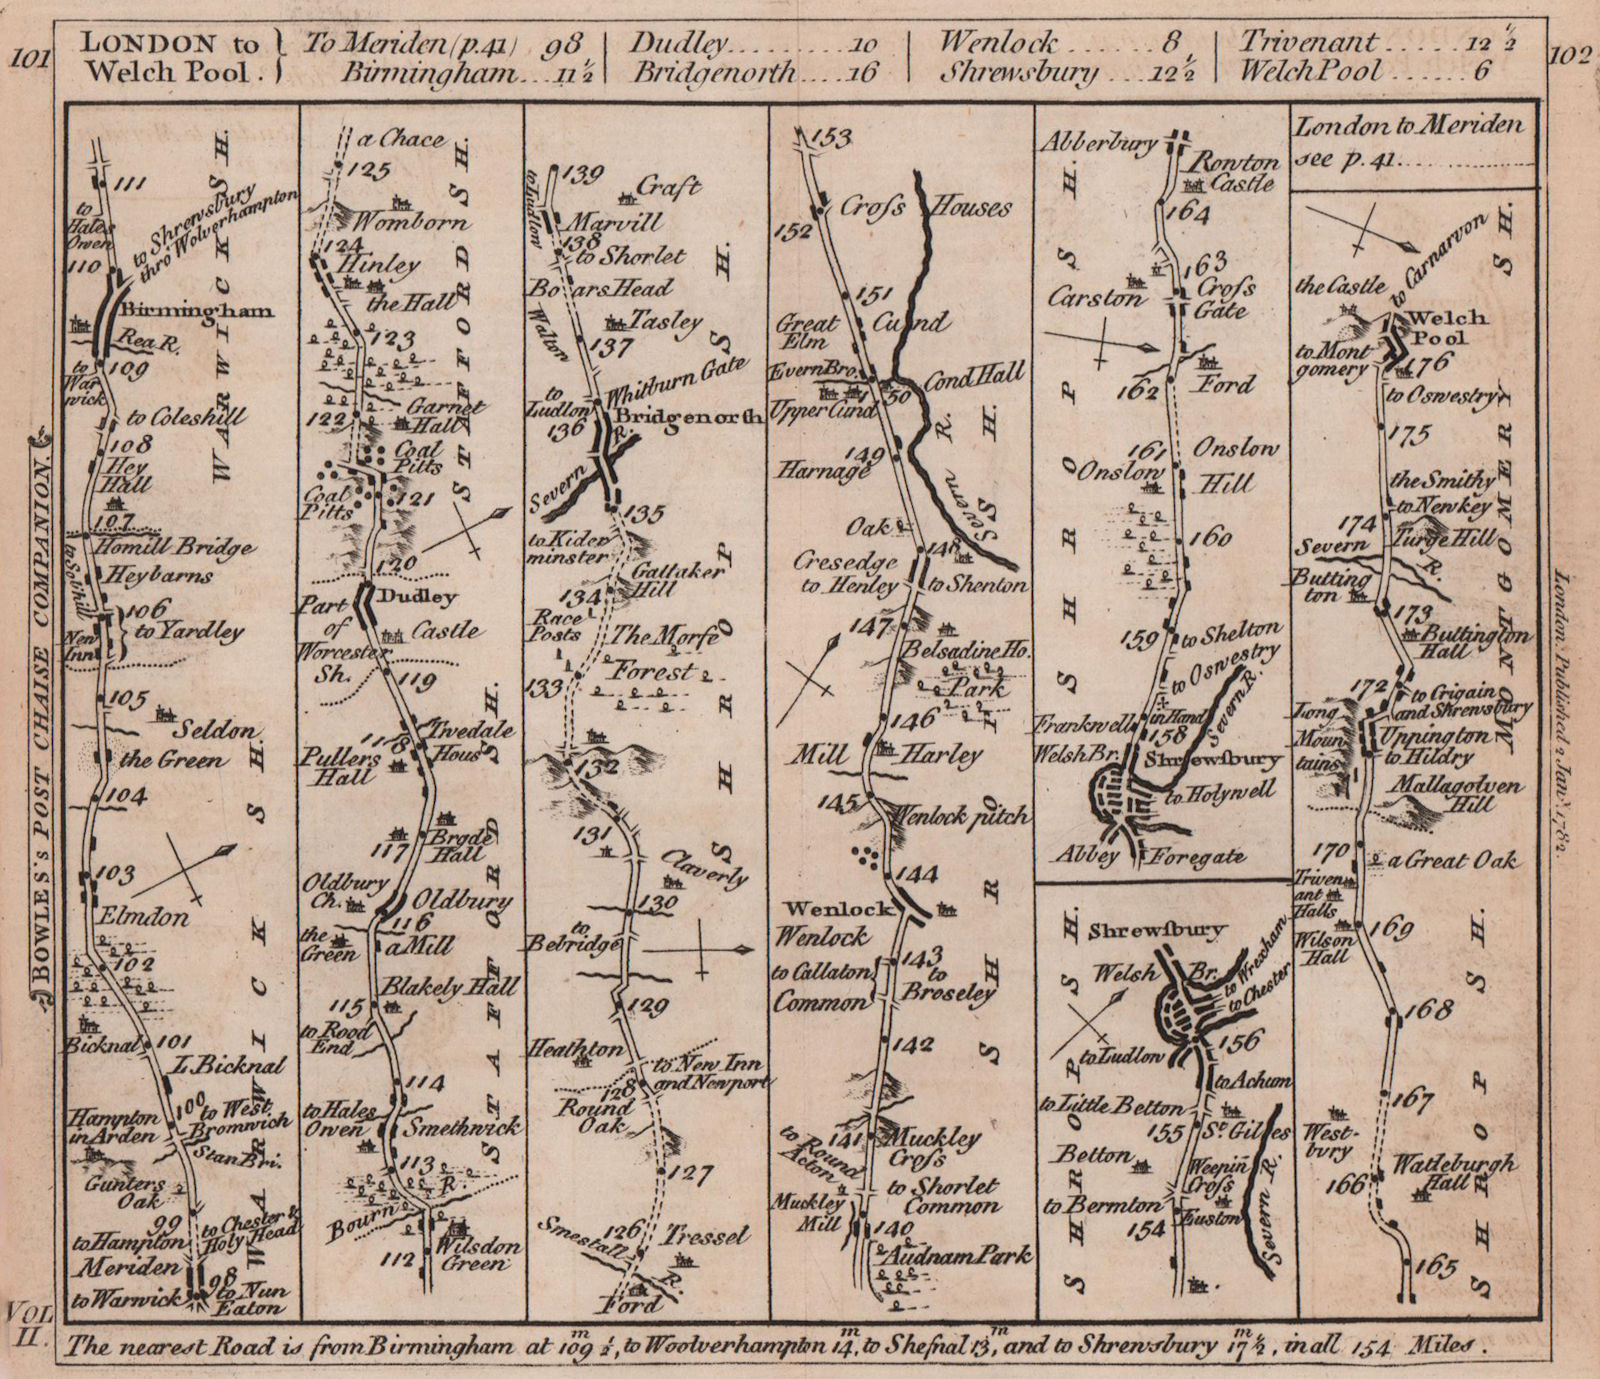 Birmingham-Dudley-Bridgnorth-Shrewsbury-Welshpool road strip map BOWLES 1782